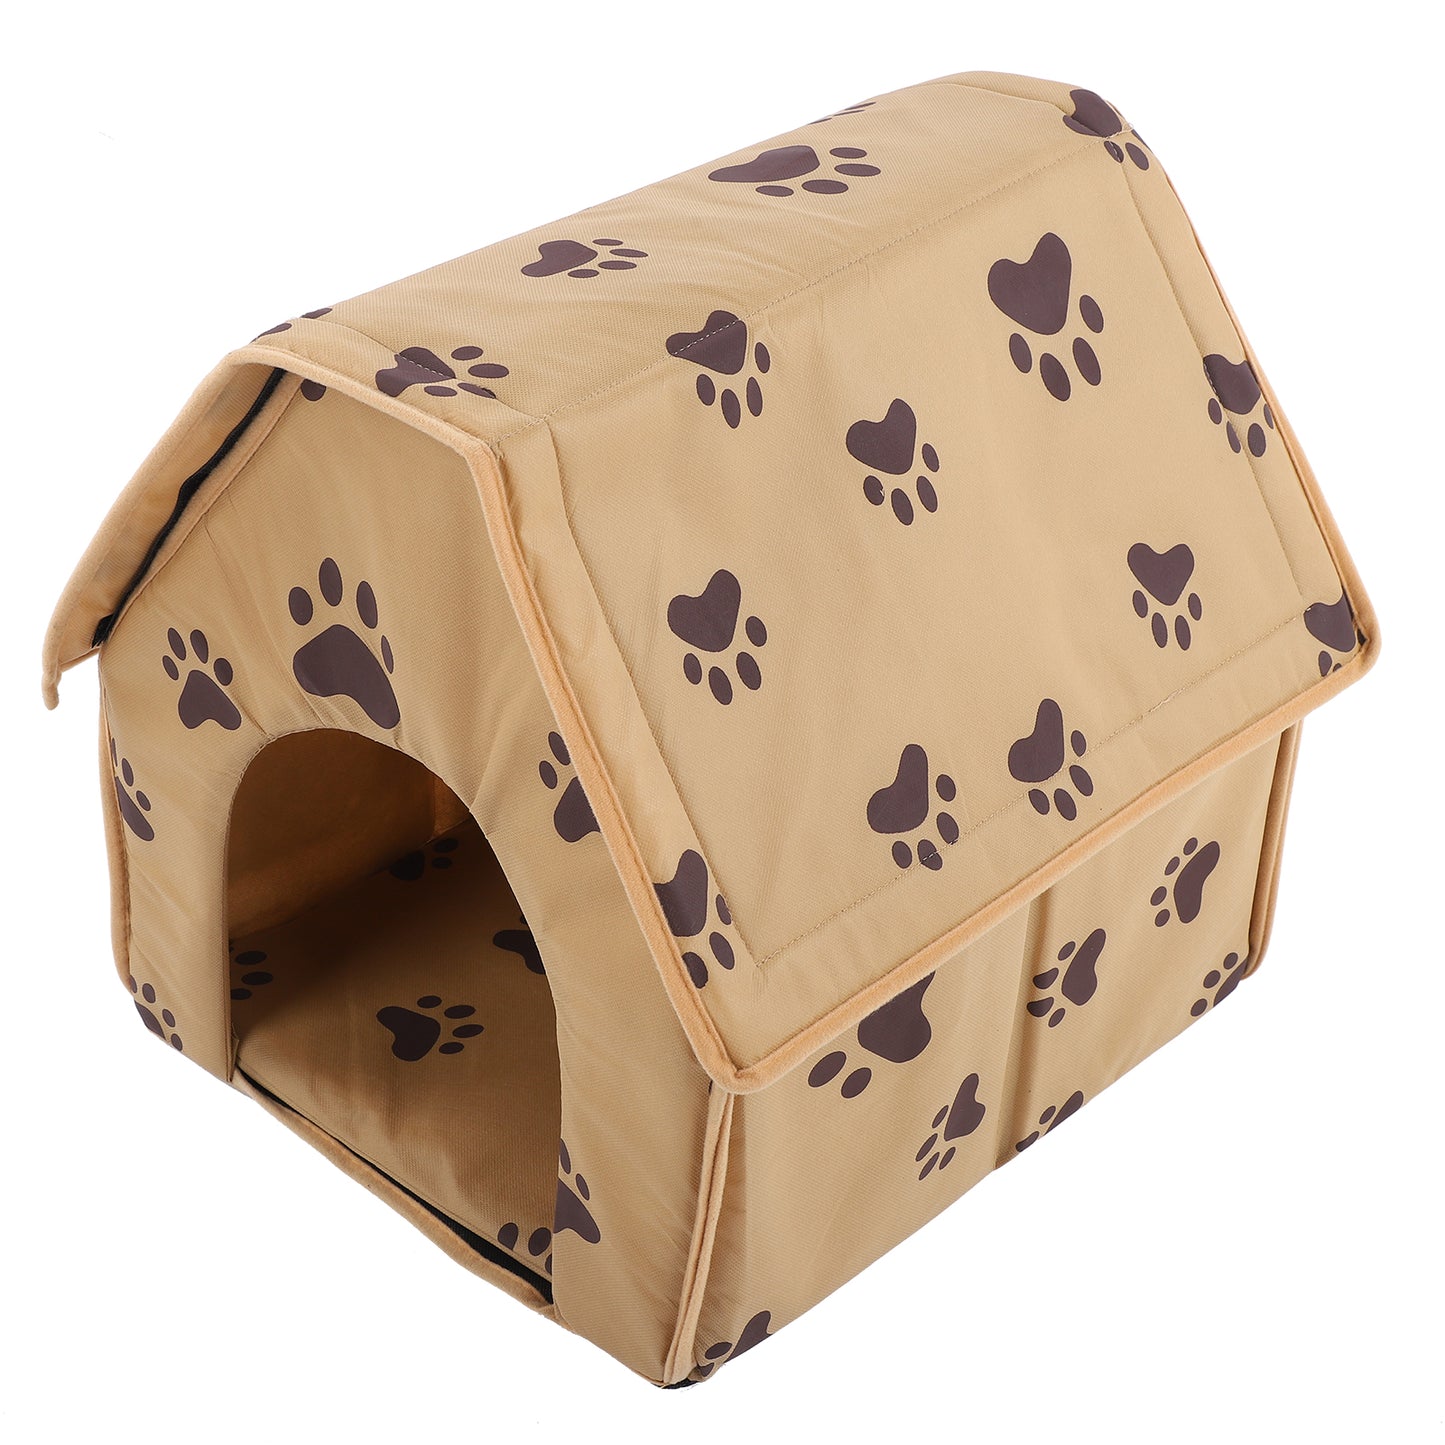 Tebru Pet House, Large Foldable Dog Bedcat House, Good Heat Preservation High Quality for Cat Dog Animals & Pet Supplies > Pet Supplies > Dog Supplies > Dog Houses Tebru   